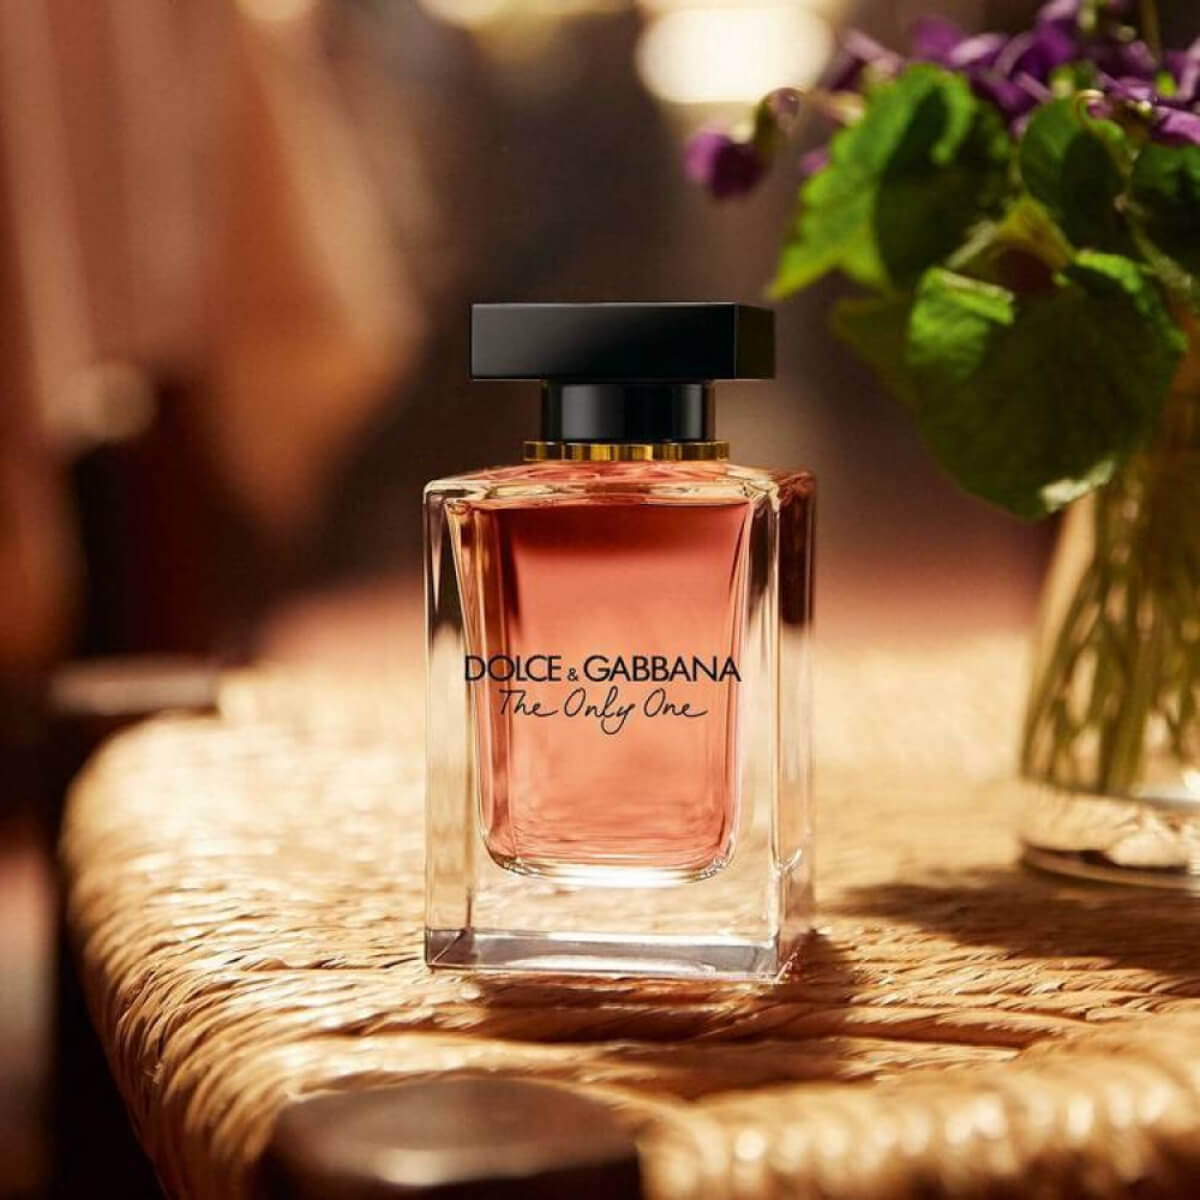 Dolce & Gabbana the Only One Eau De Parfum - 50ML